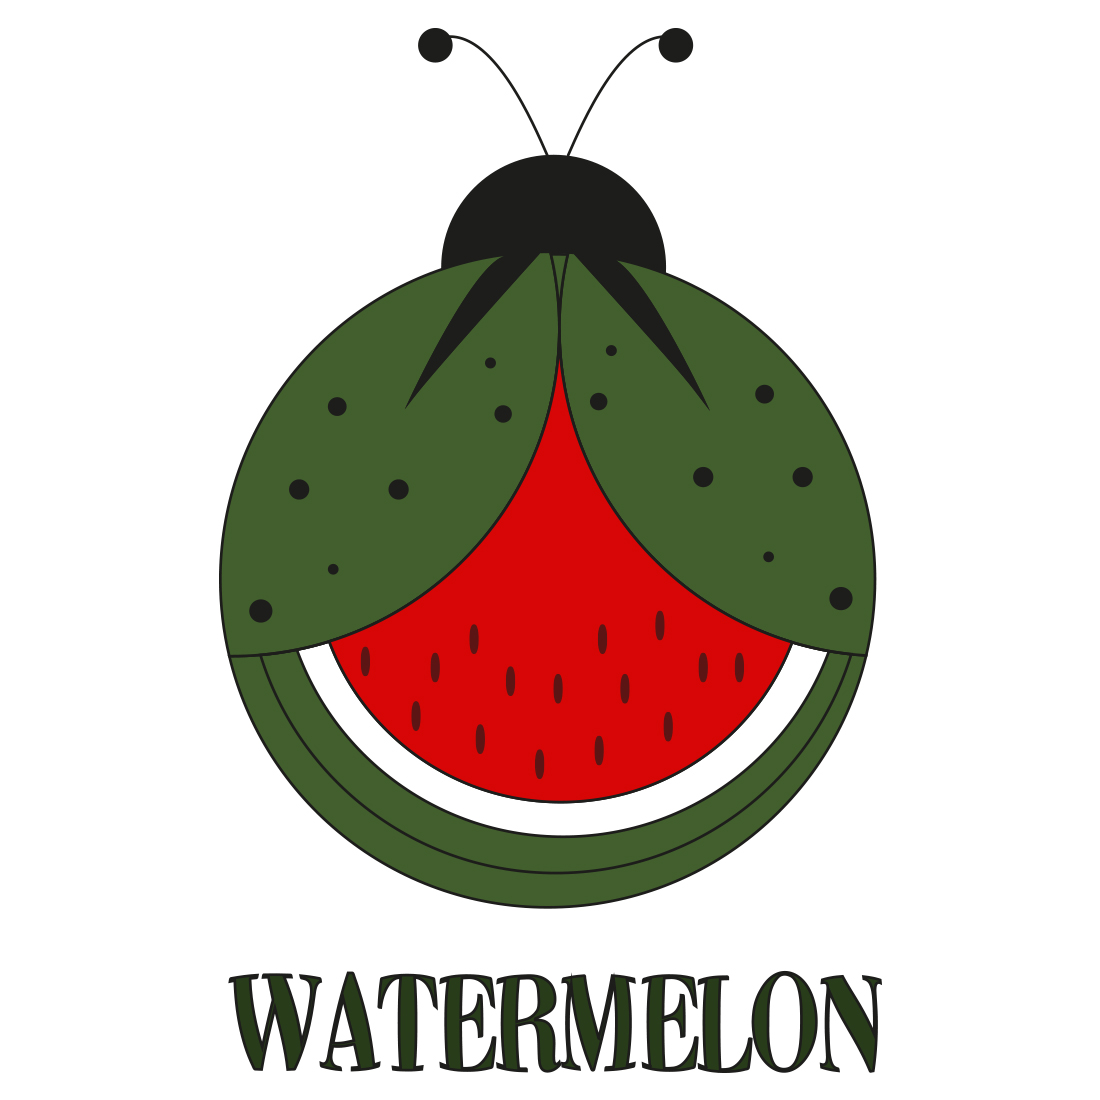 Ukrainian watermelon art logo vector cover image.